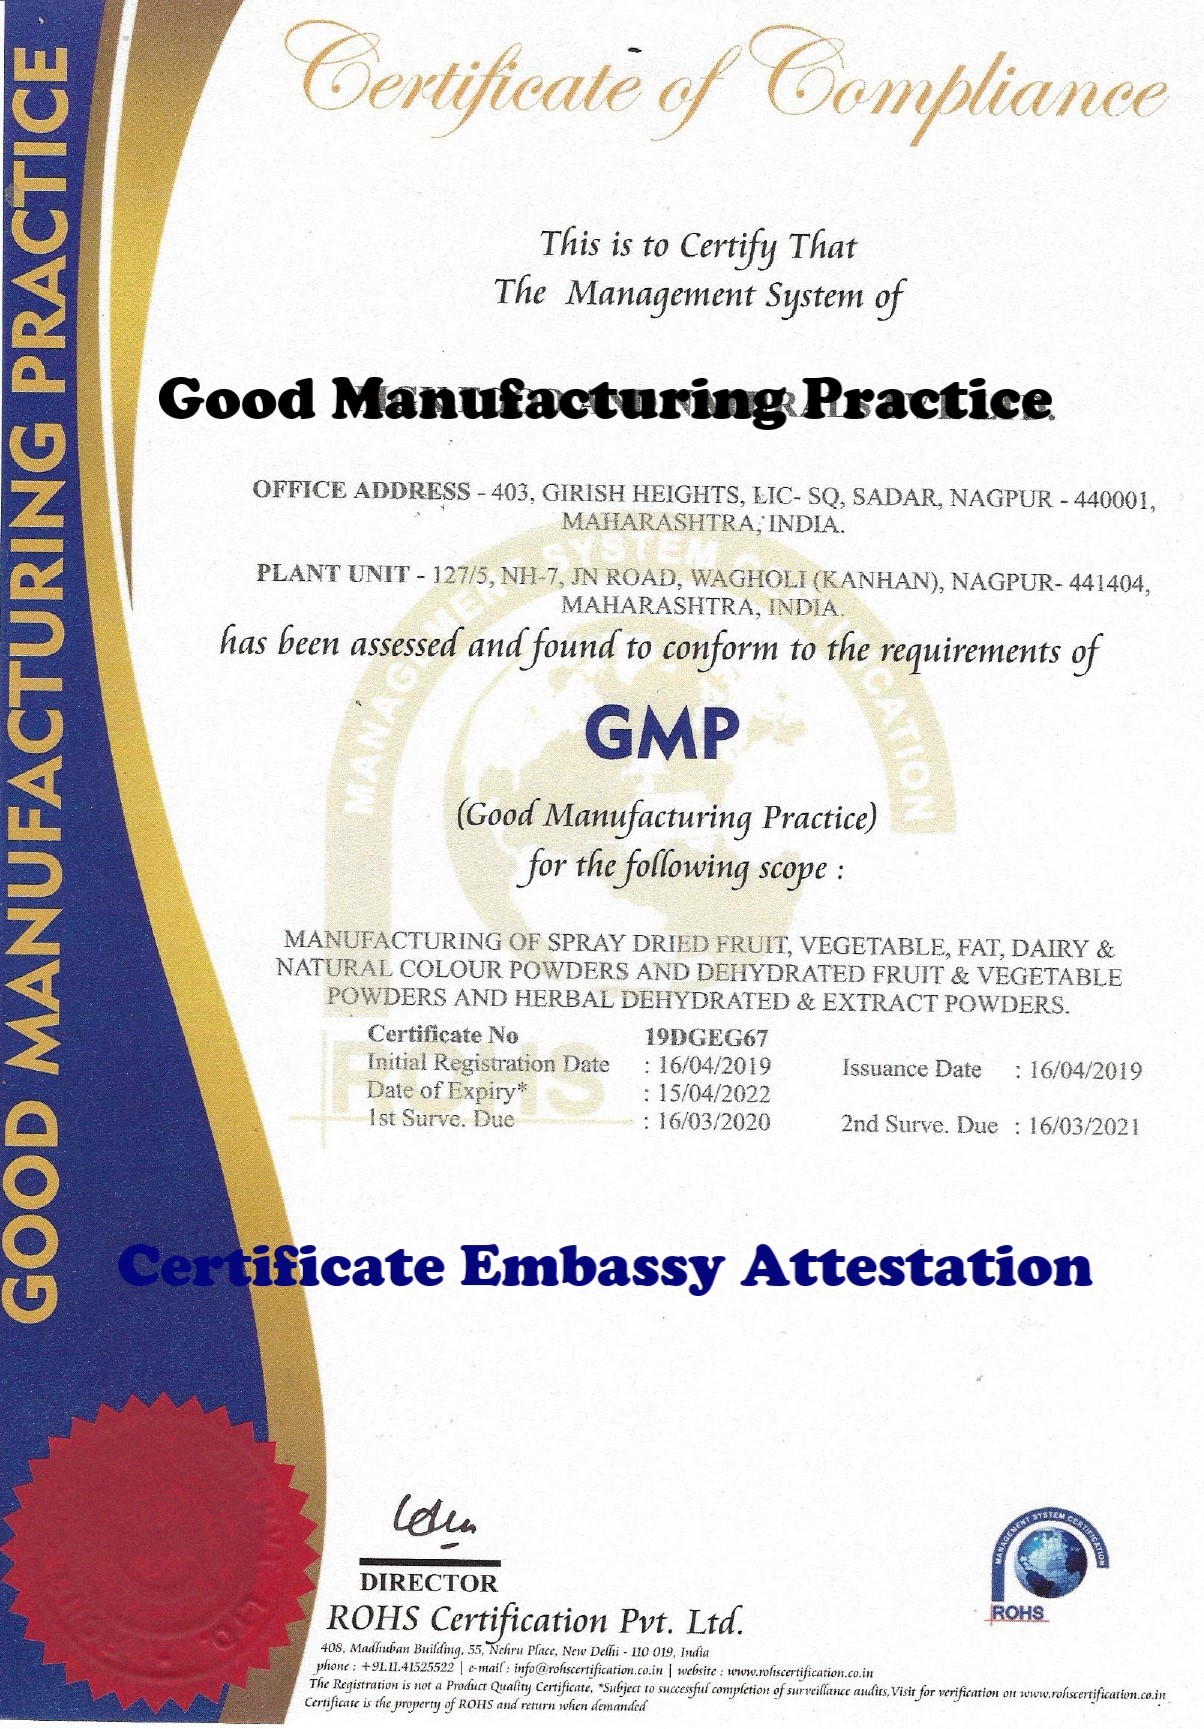 GMP Certificate Attestation from Samoa Embassy